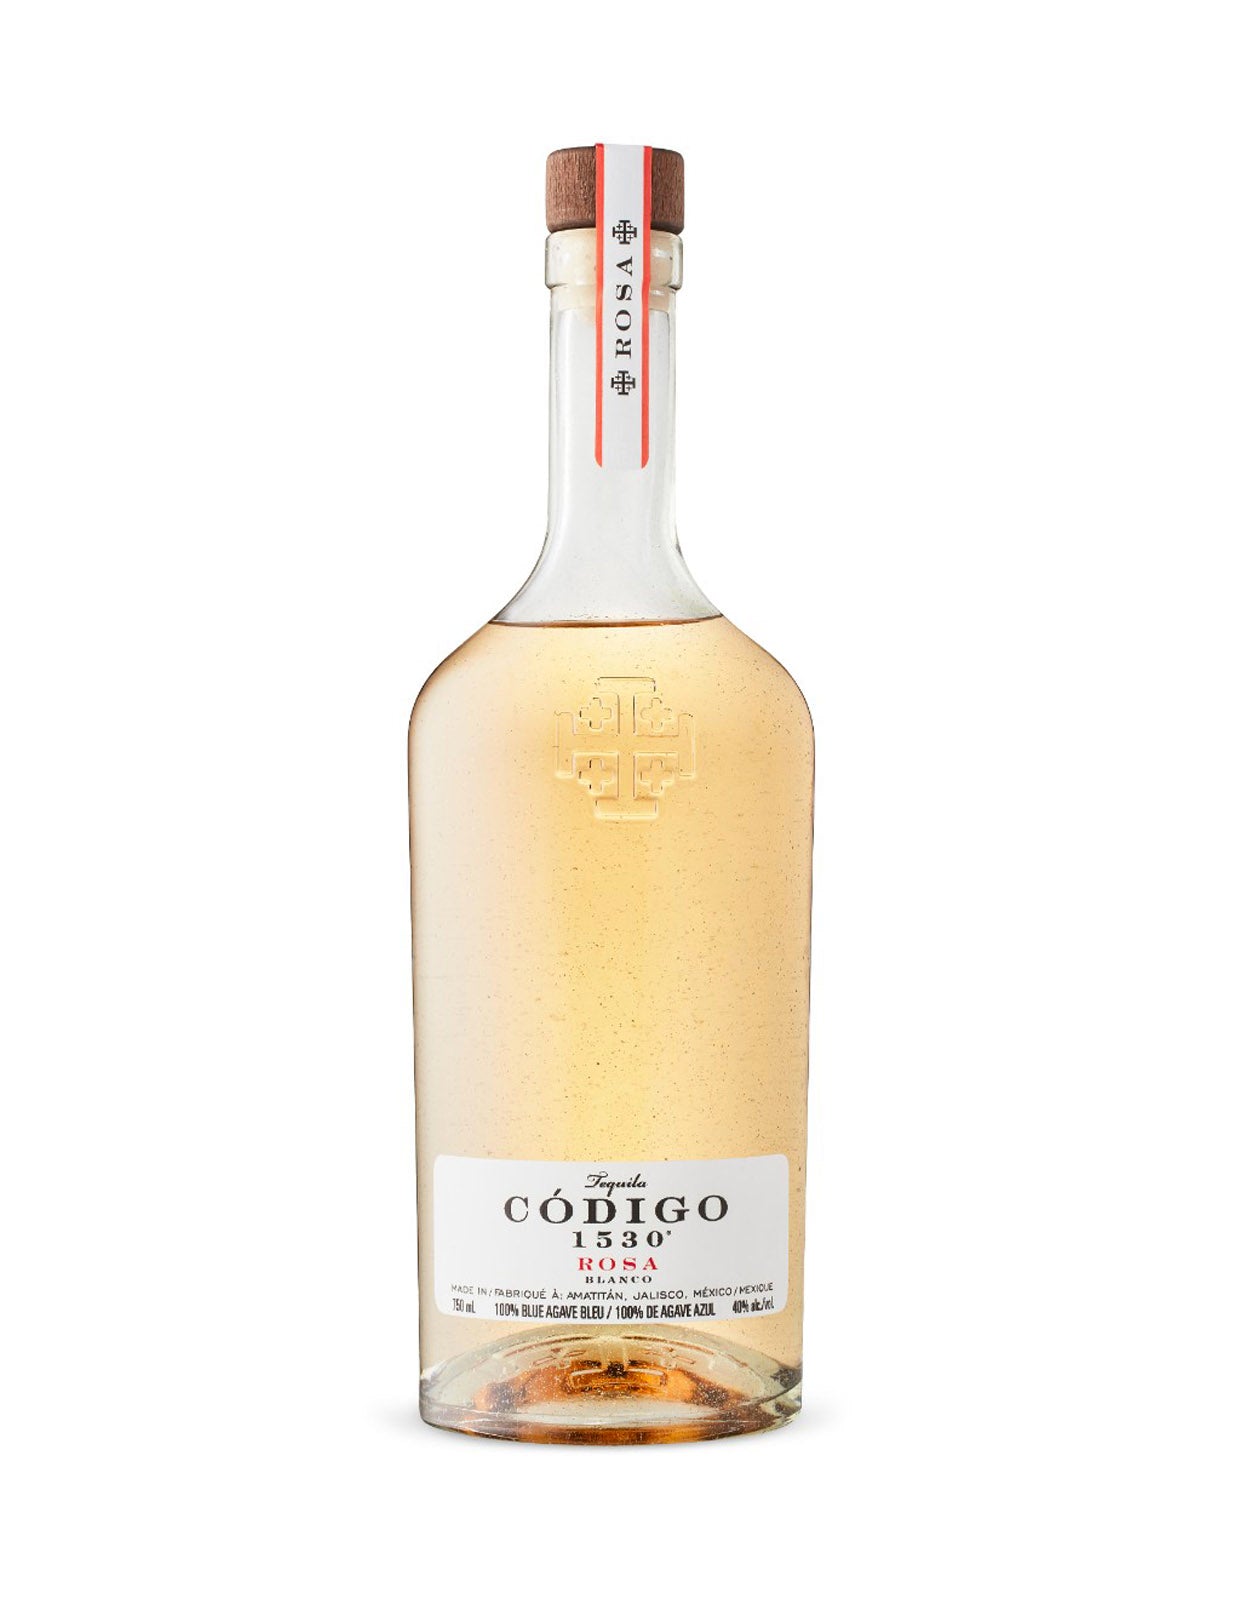 Buy Codigo 1530 Blanco Rosa Tequila